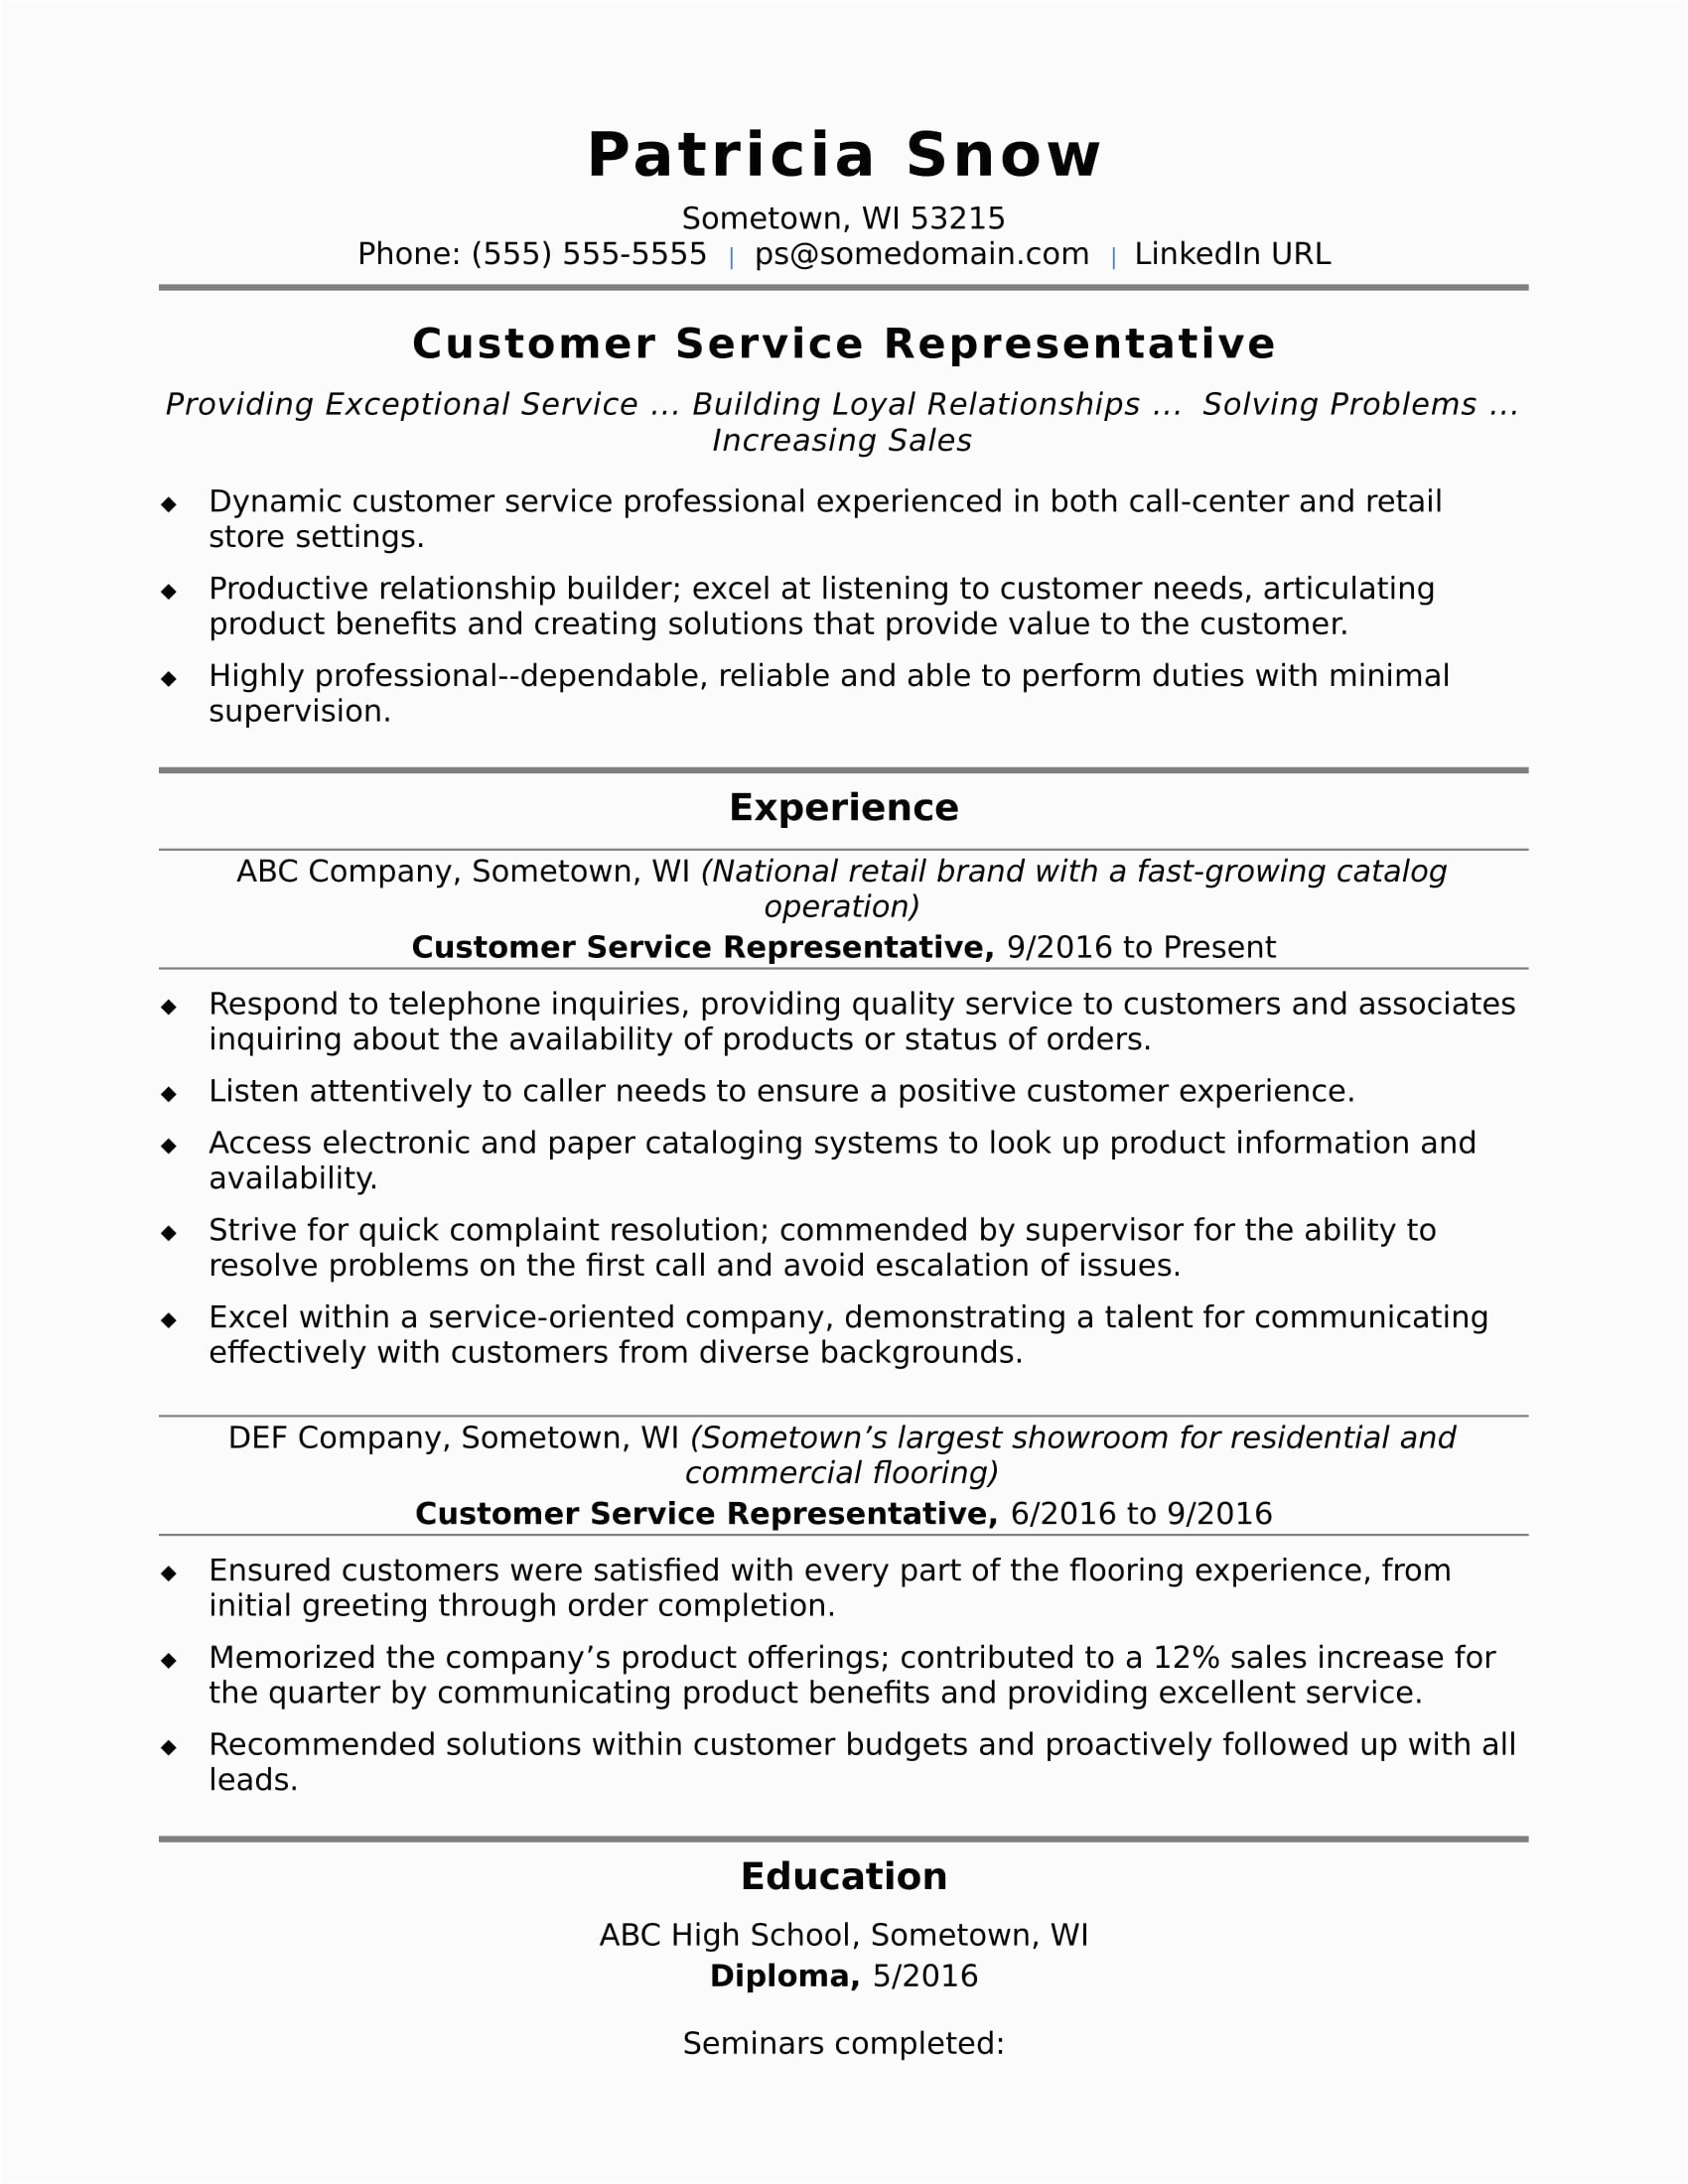 Sample Resume for Customer Service Representative with Experience Customer Service Representative Resume Sample